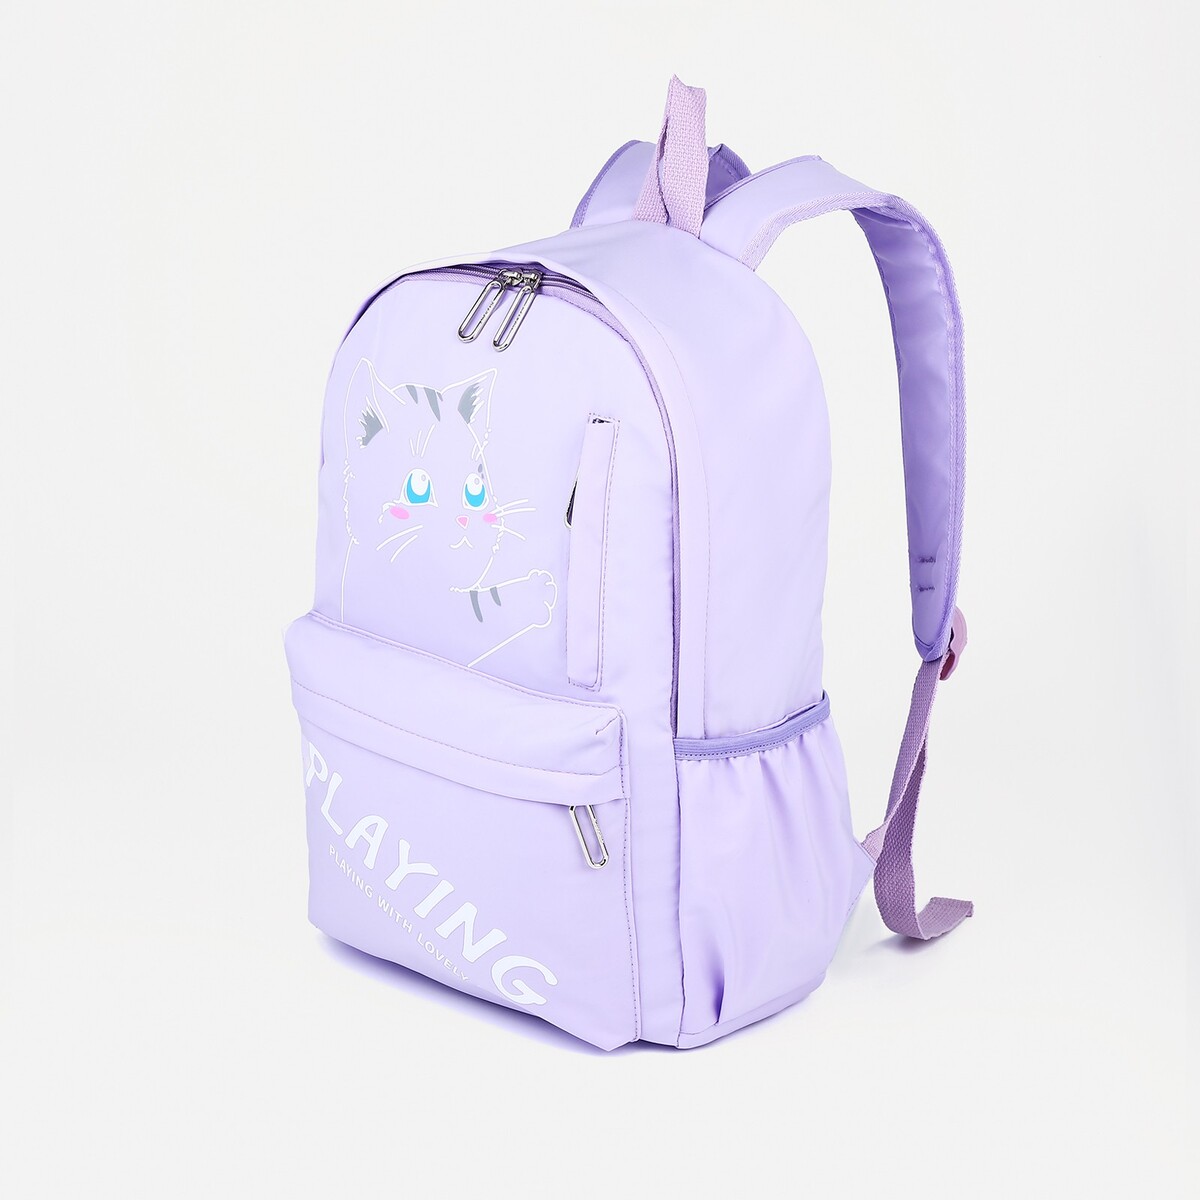 Рюкзак молодежный из текстиля, 4 кармана, цвет сиреневый рюкзак школьный из текстиля на молнии 4 кармана сиреневый